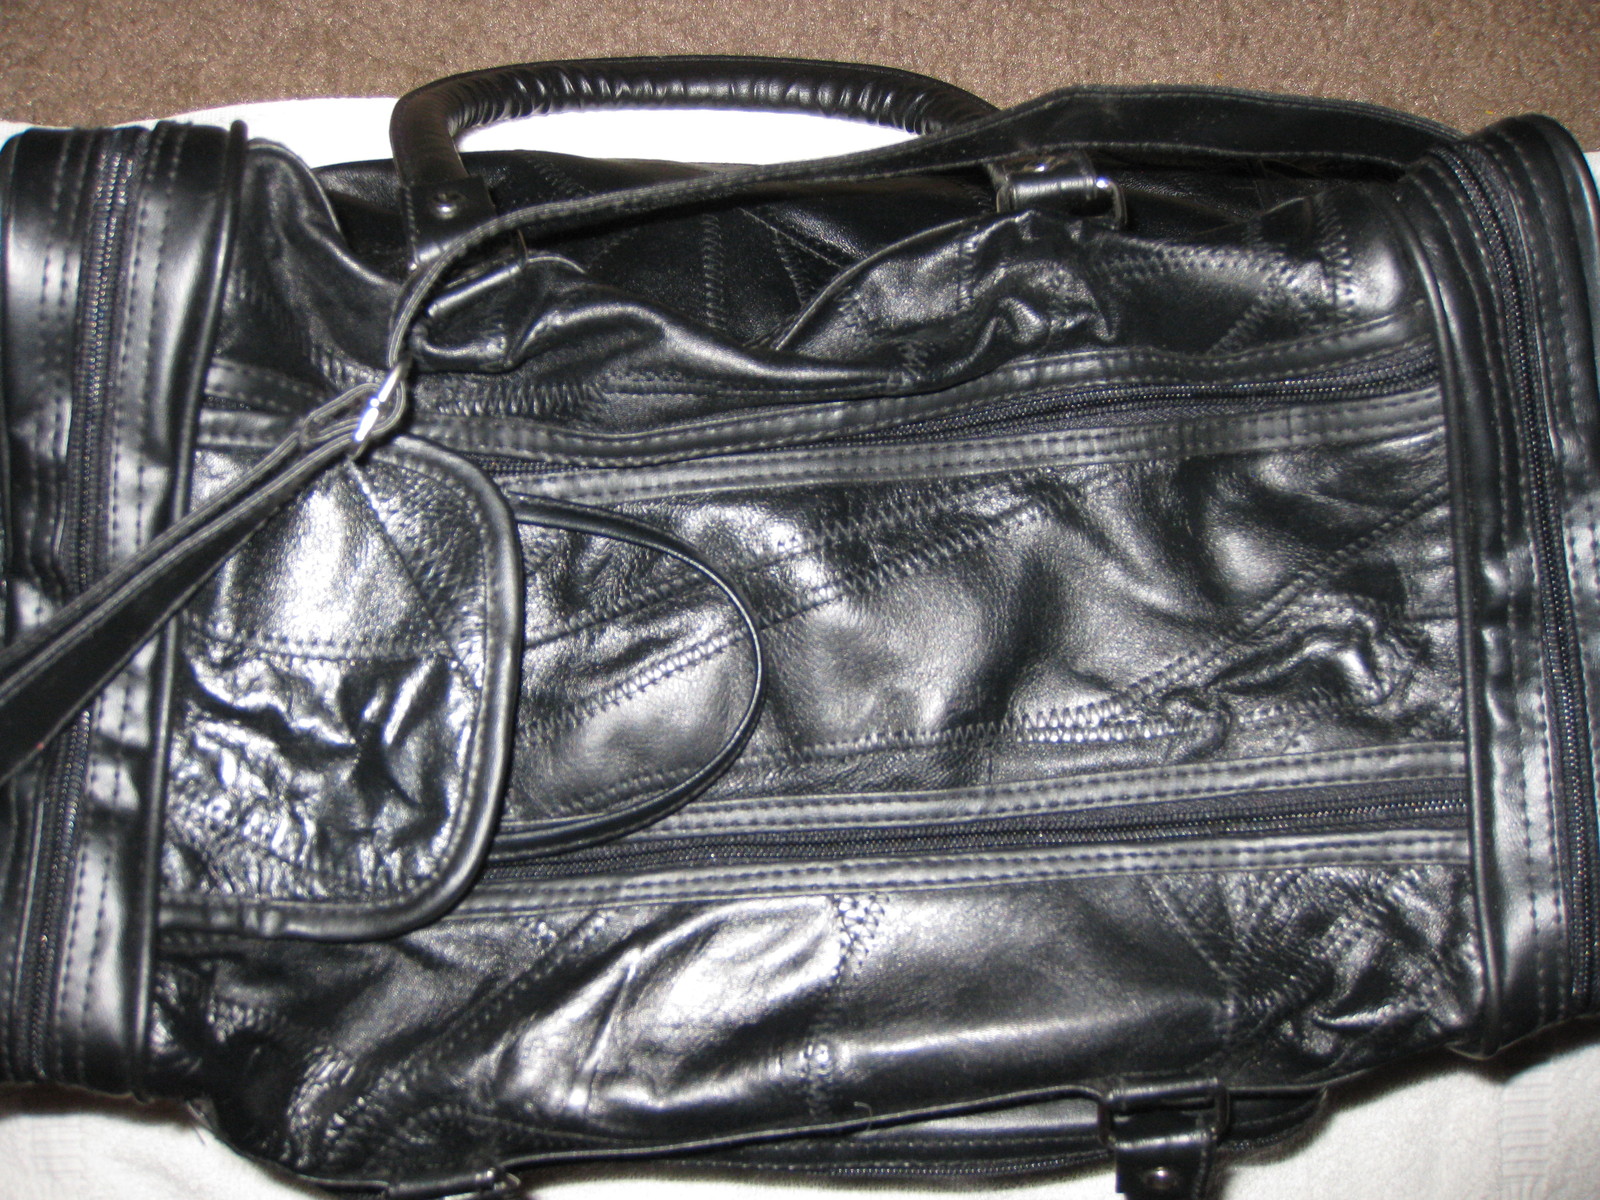 NEW LARGE BLACK LEATHER DUFFLE BAG, Adjustable strap, TRAVEL - Luggage